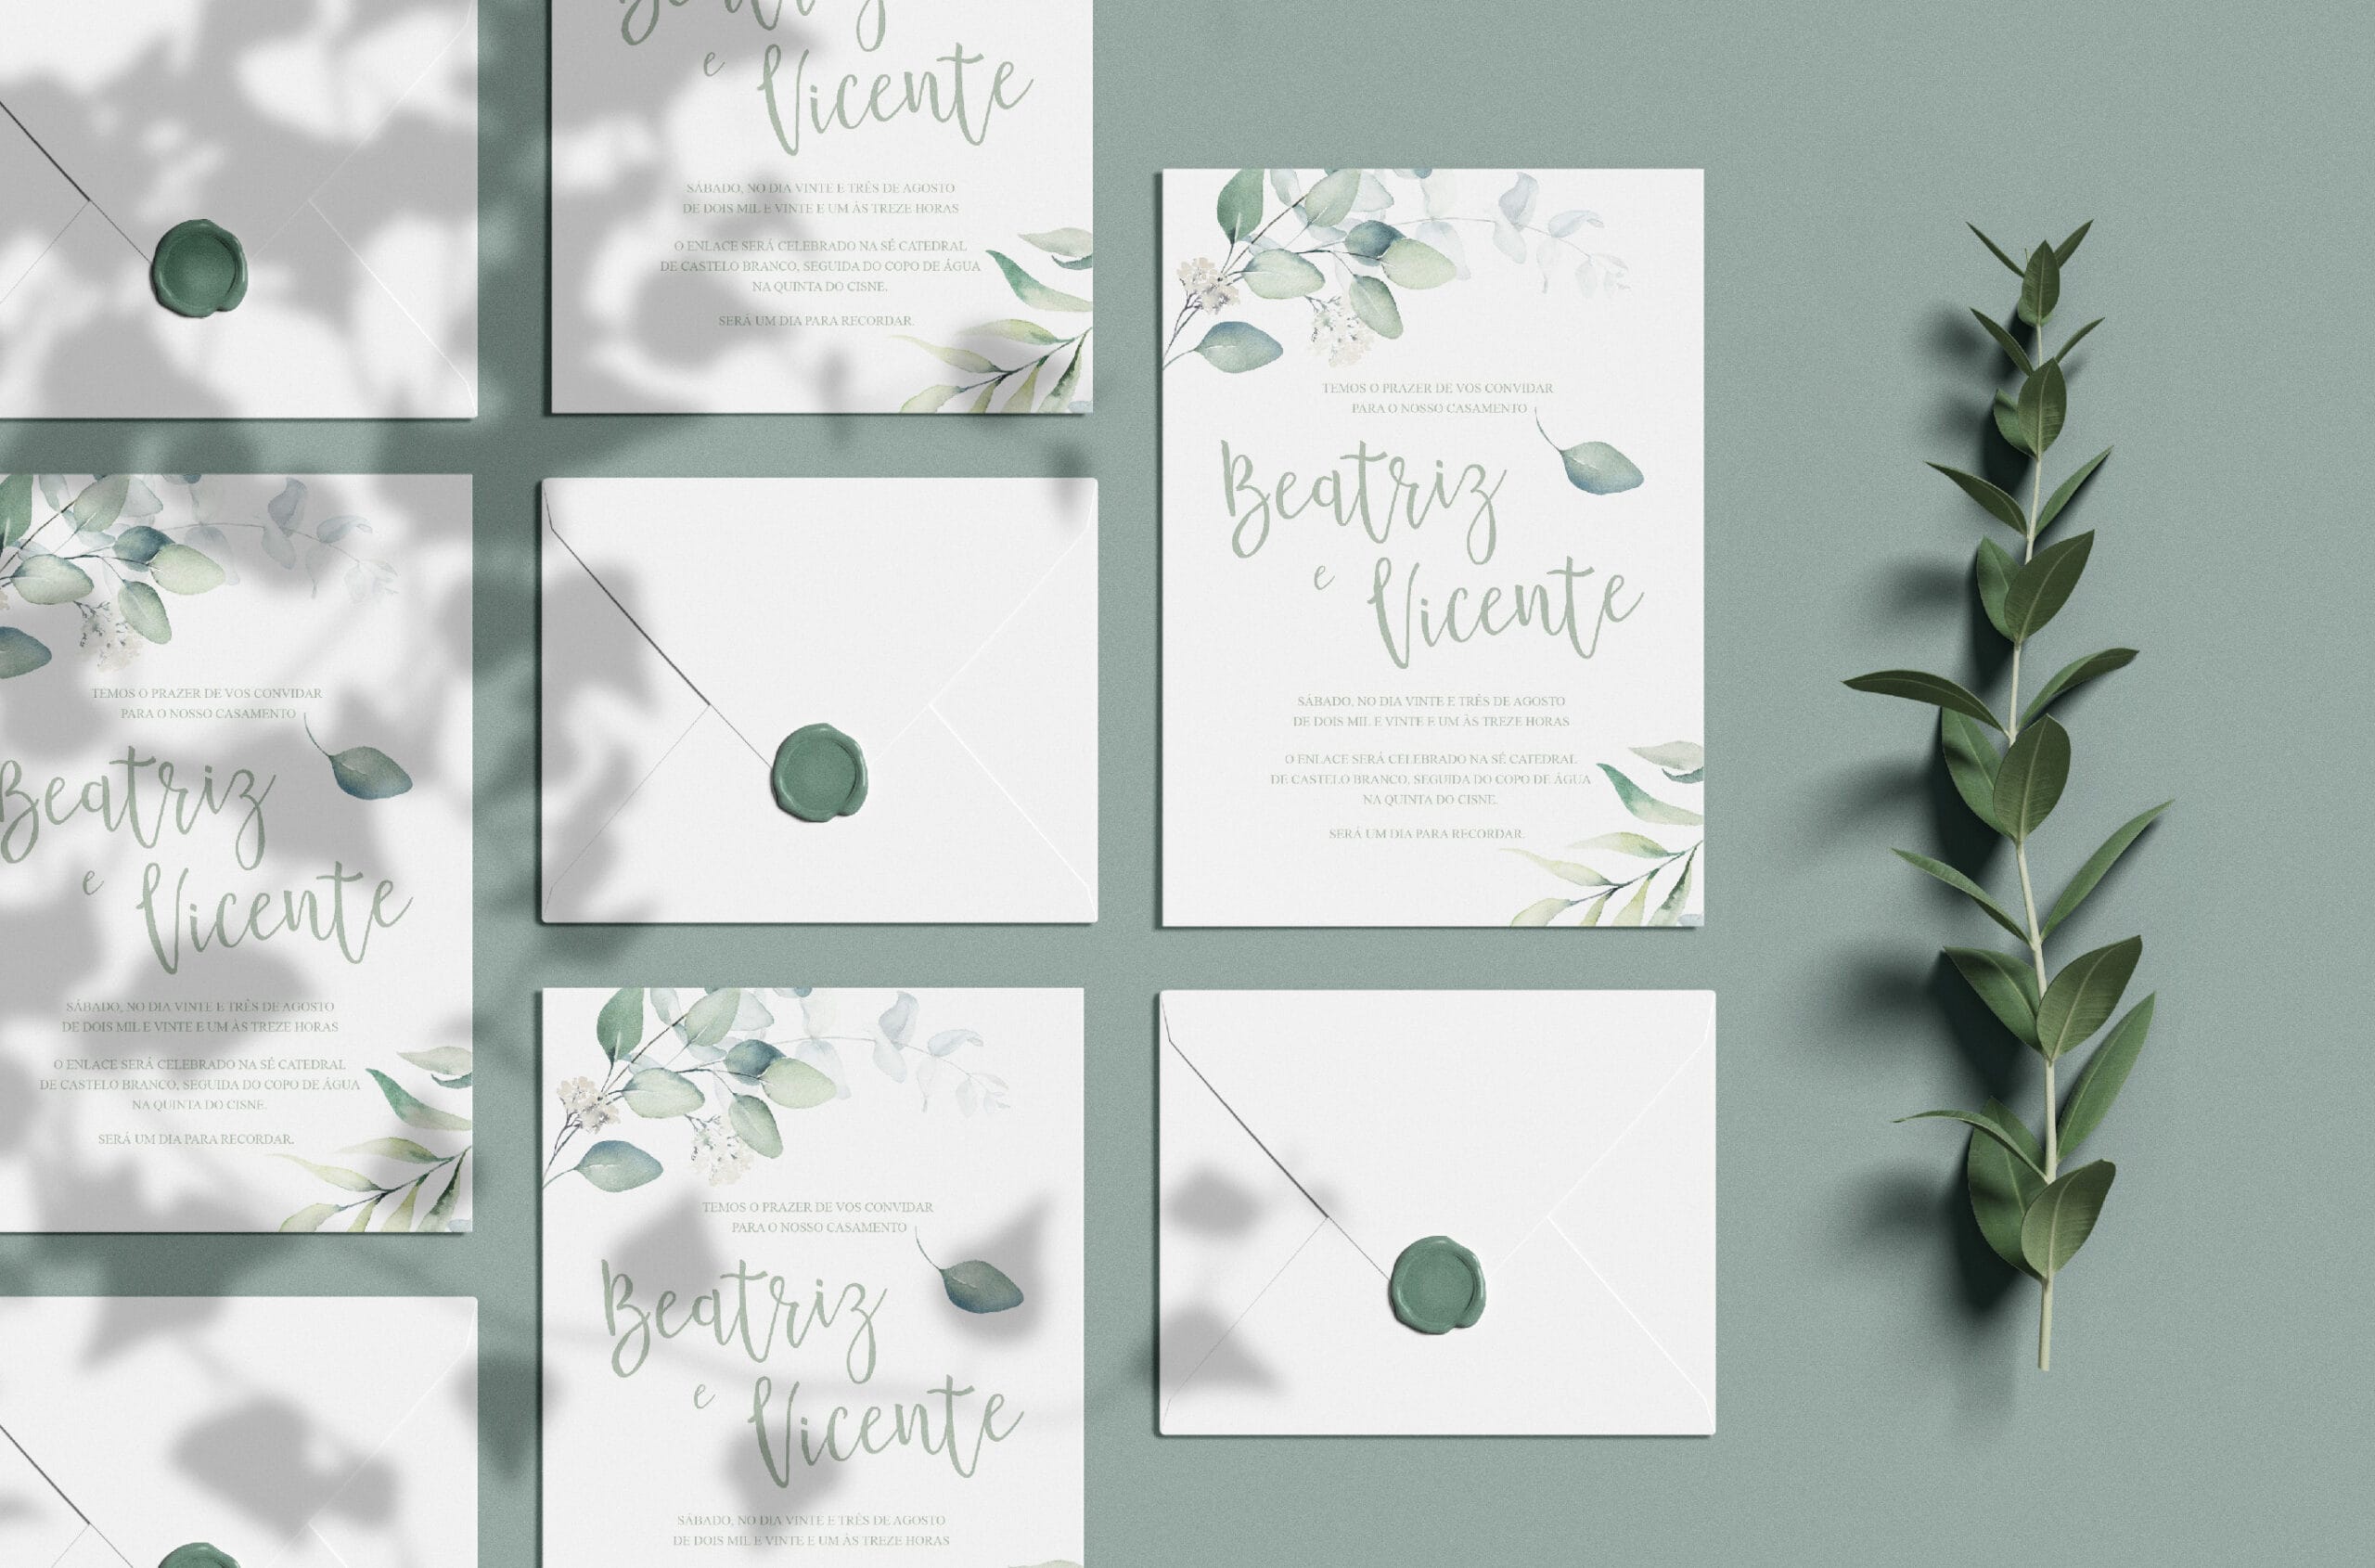 Convites de casamento brancos de estilo floral com pétalas verdes e envelopes brancos com lacres verdes